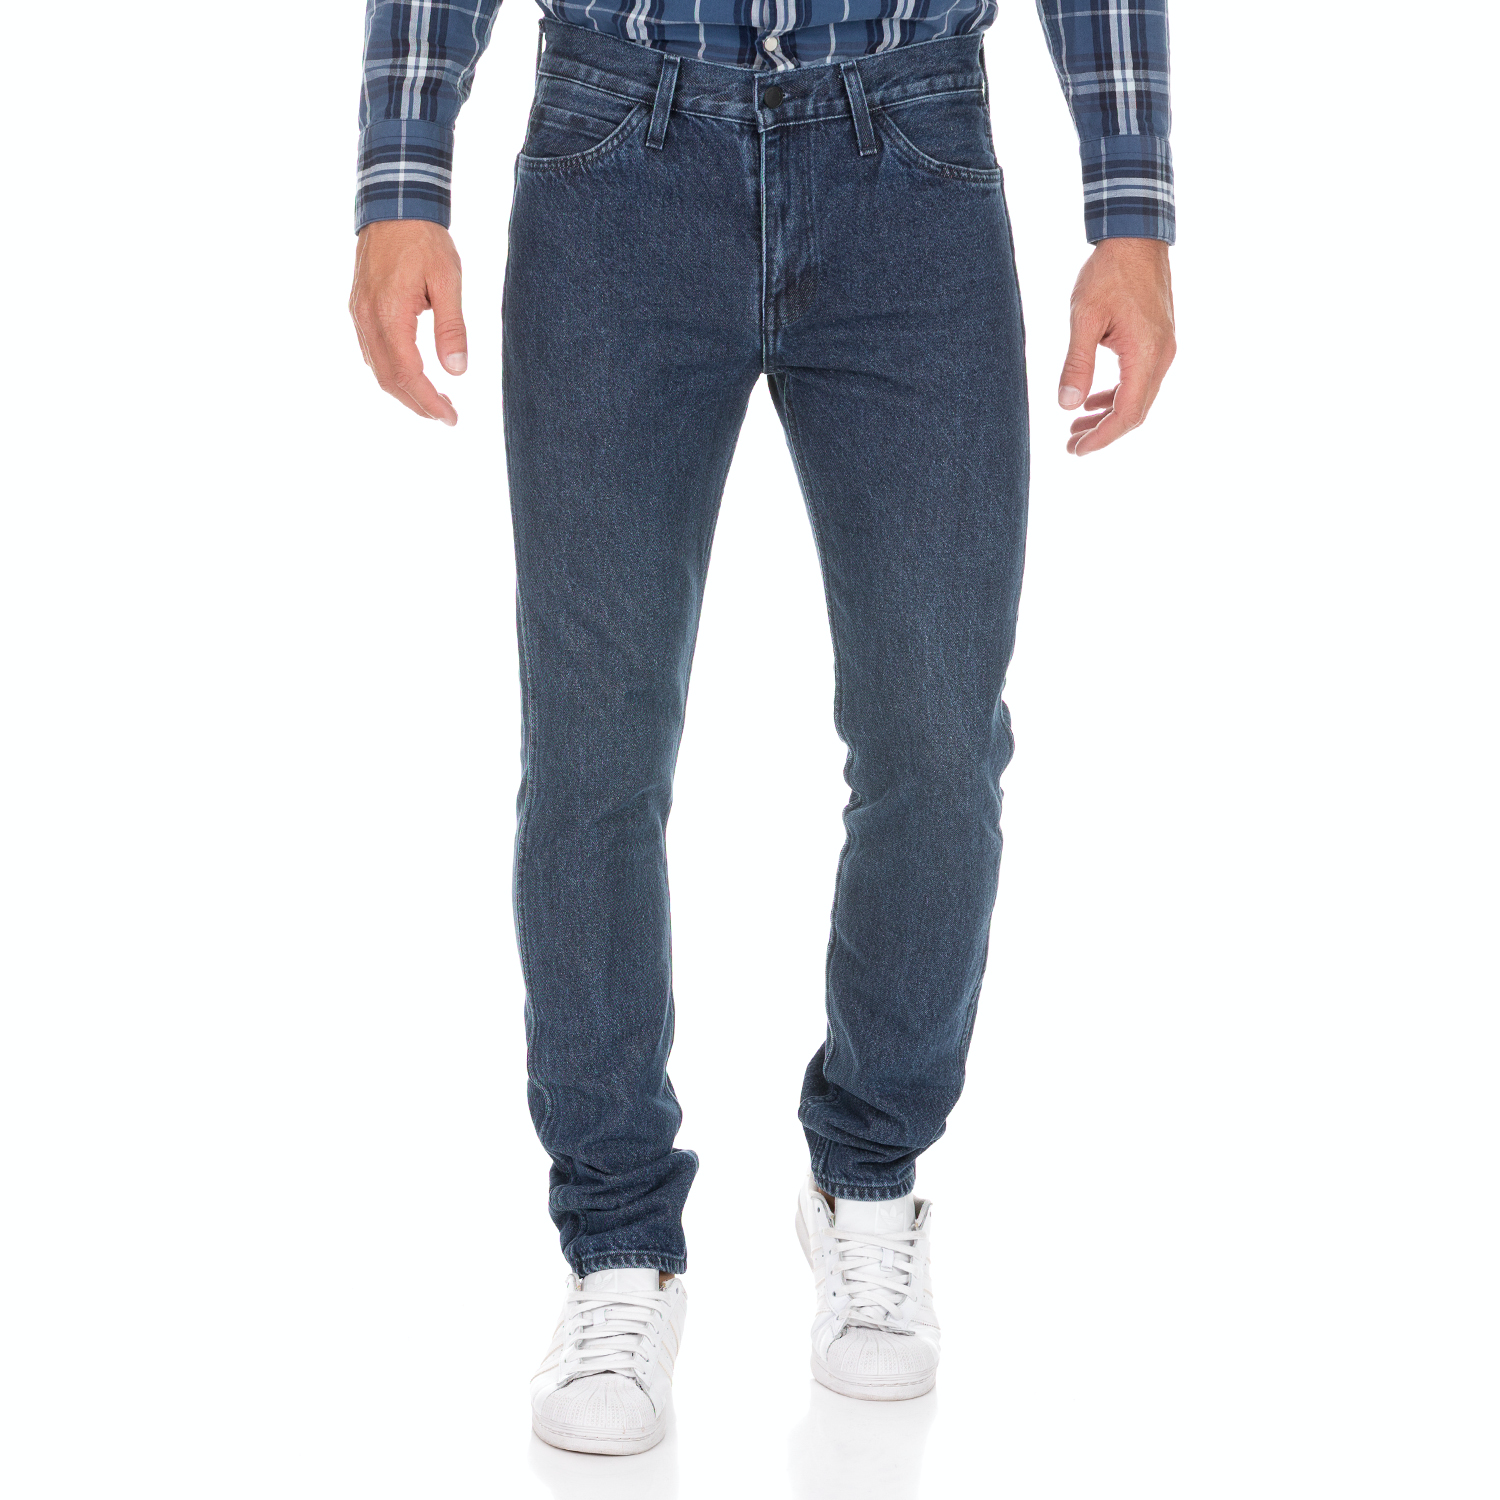 LEVI'S - Ανδρικό jean παντελόνι LEVI'S L8 SLIM TAPER FENCES μπλε Ανδρικά/Ρούχα/Τζίν/Skinny